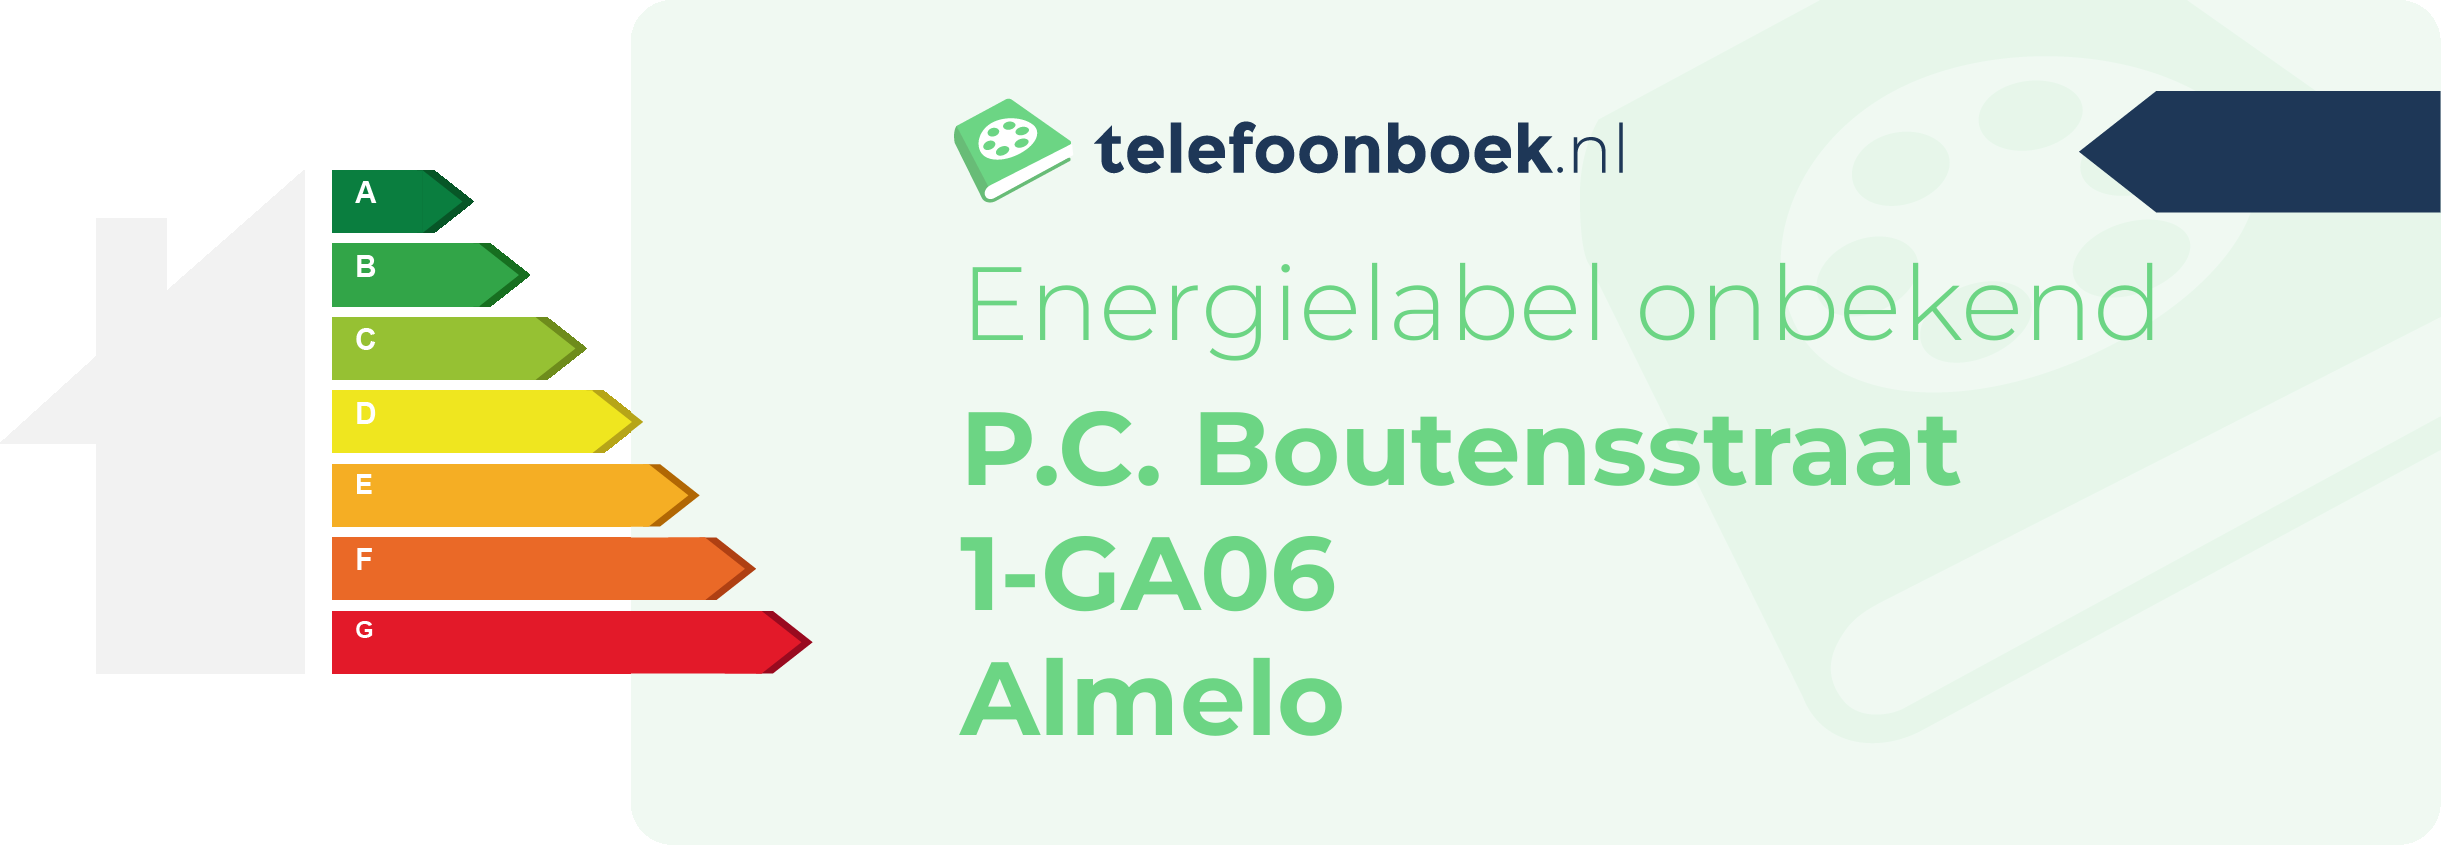 Energielabel P.C. Boutensstraat 1-GA06 Almelo